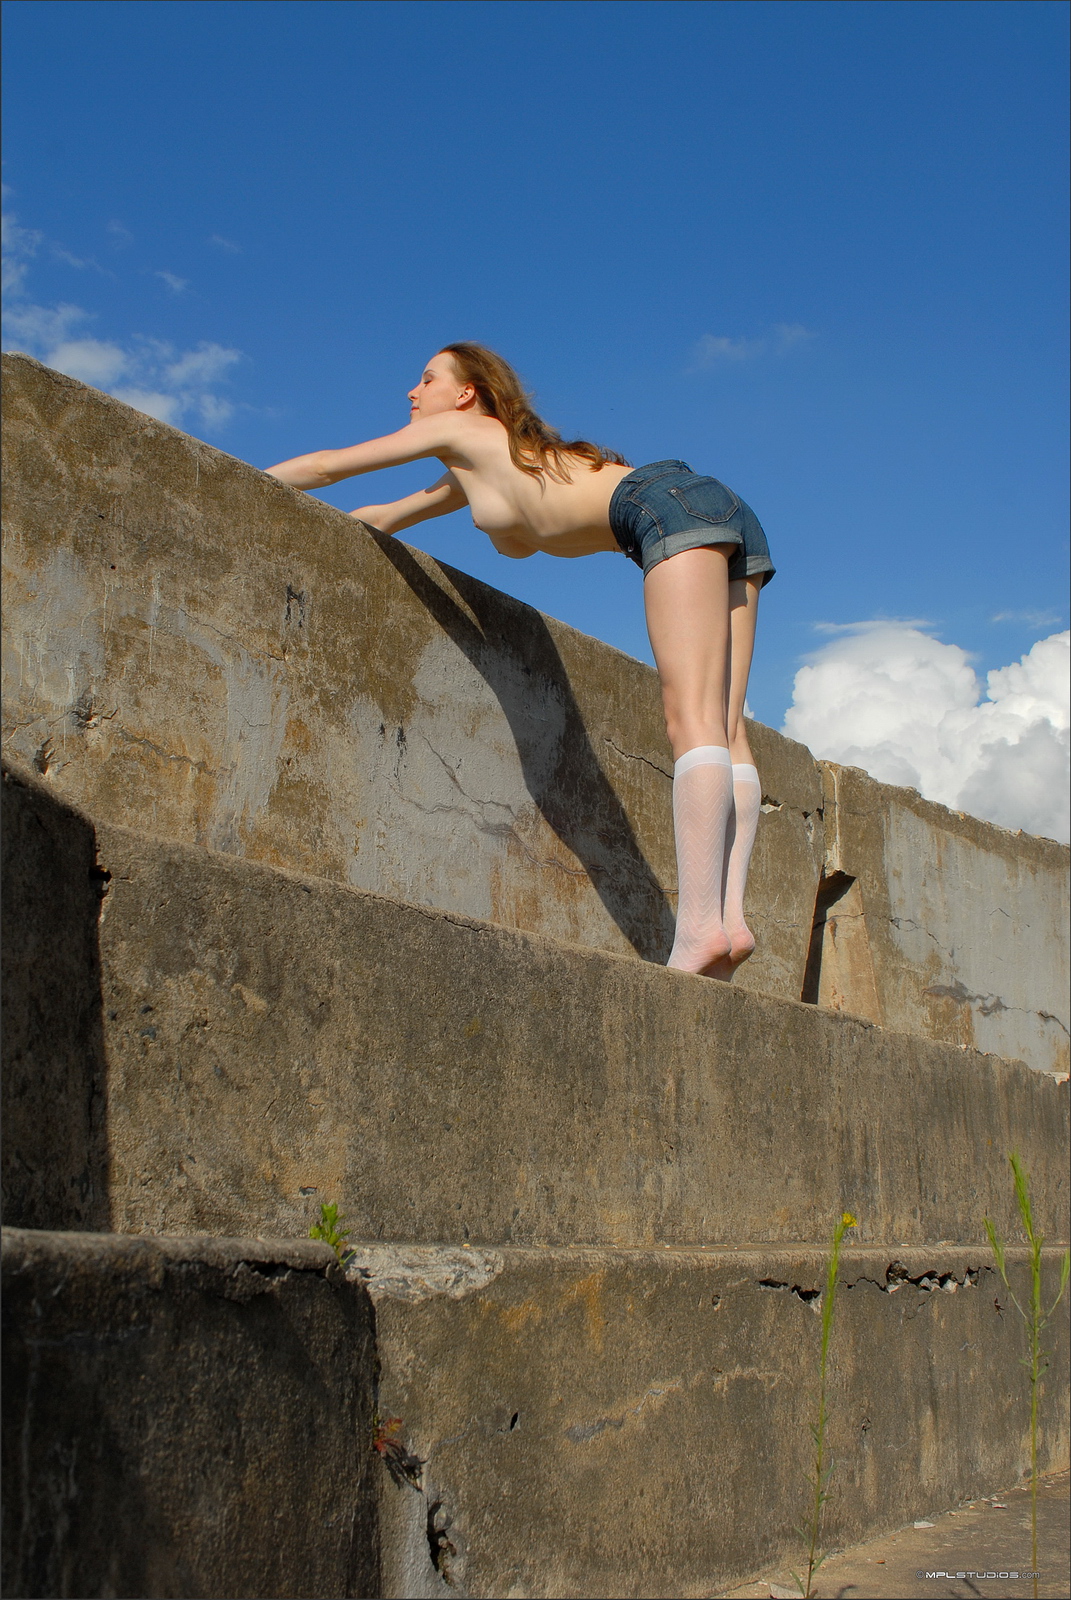 lidiya-concrete-wall-nude-slim-body-mplstudios-04